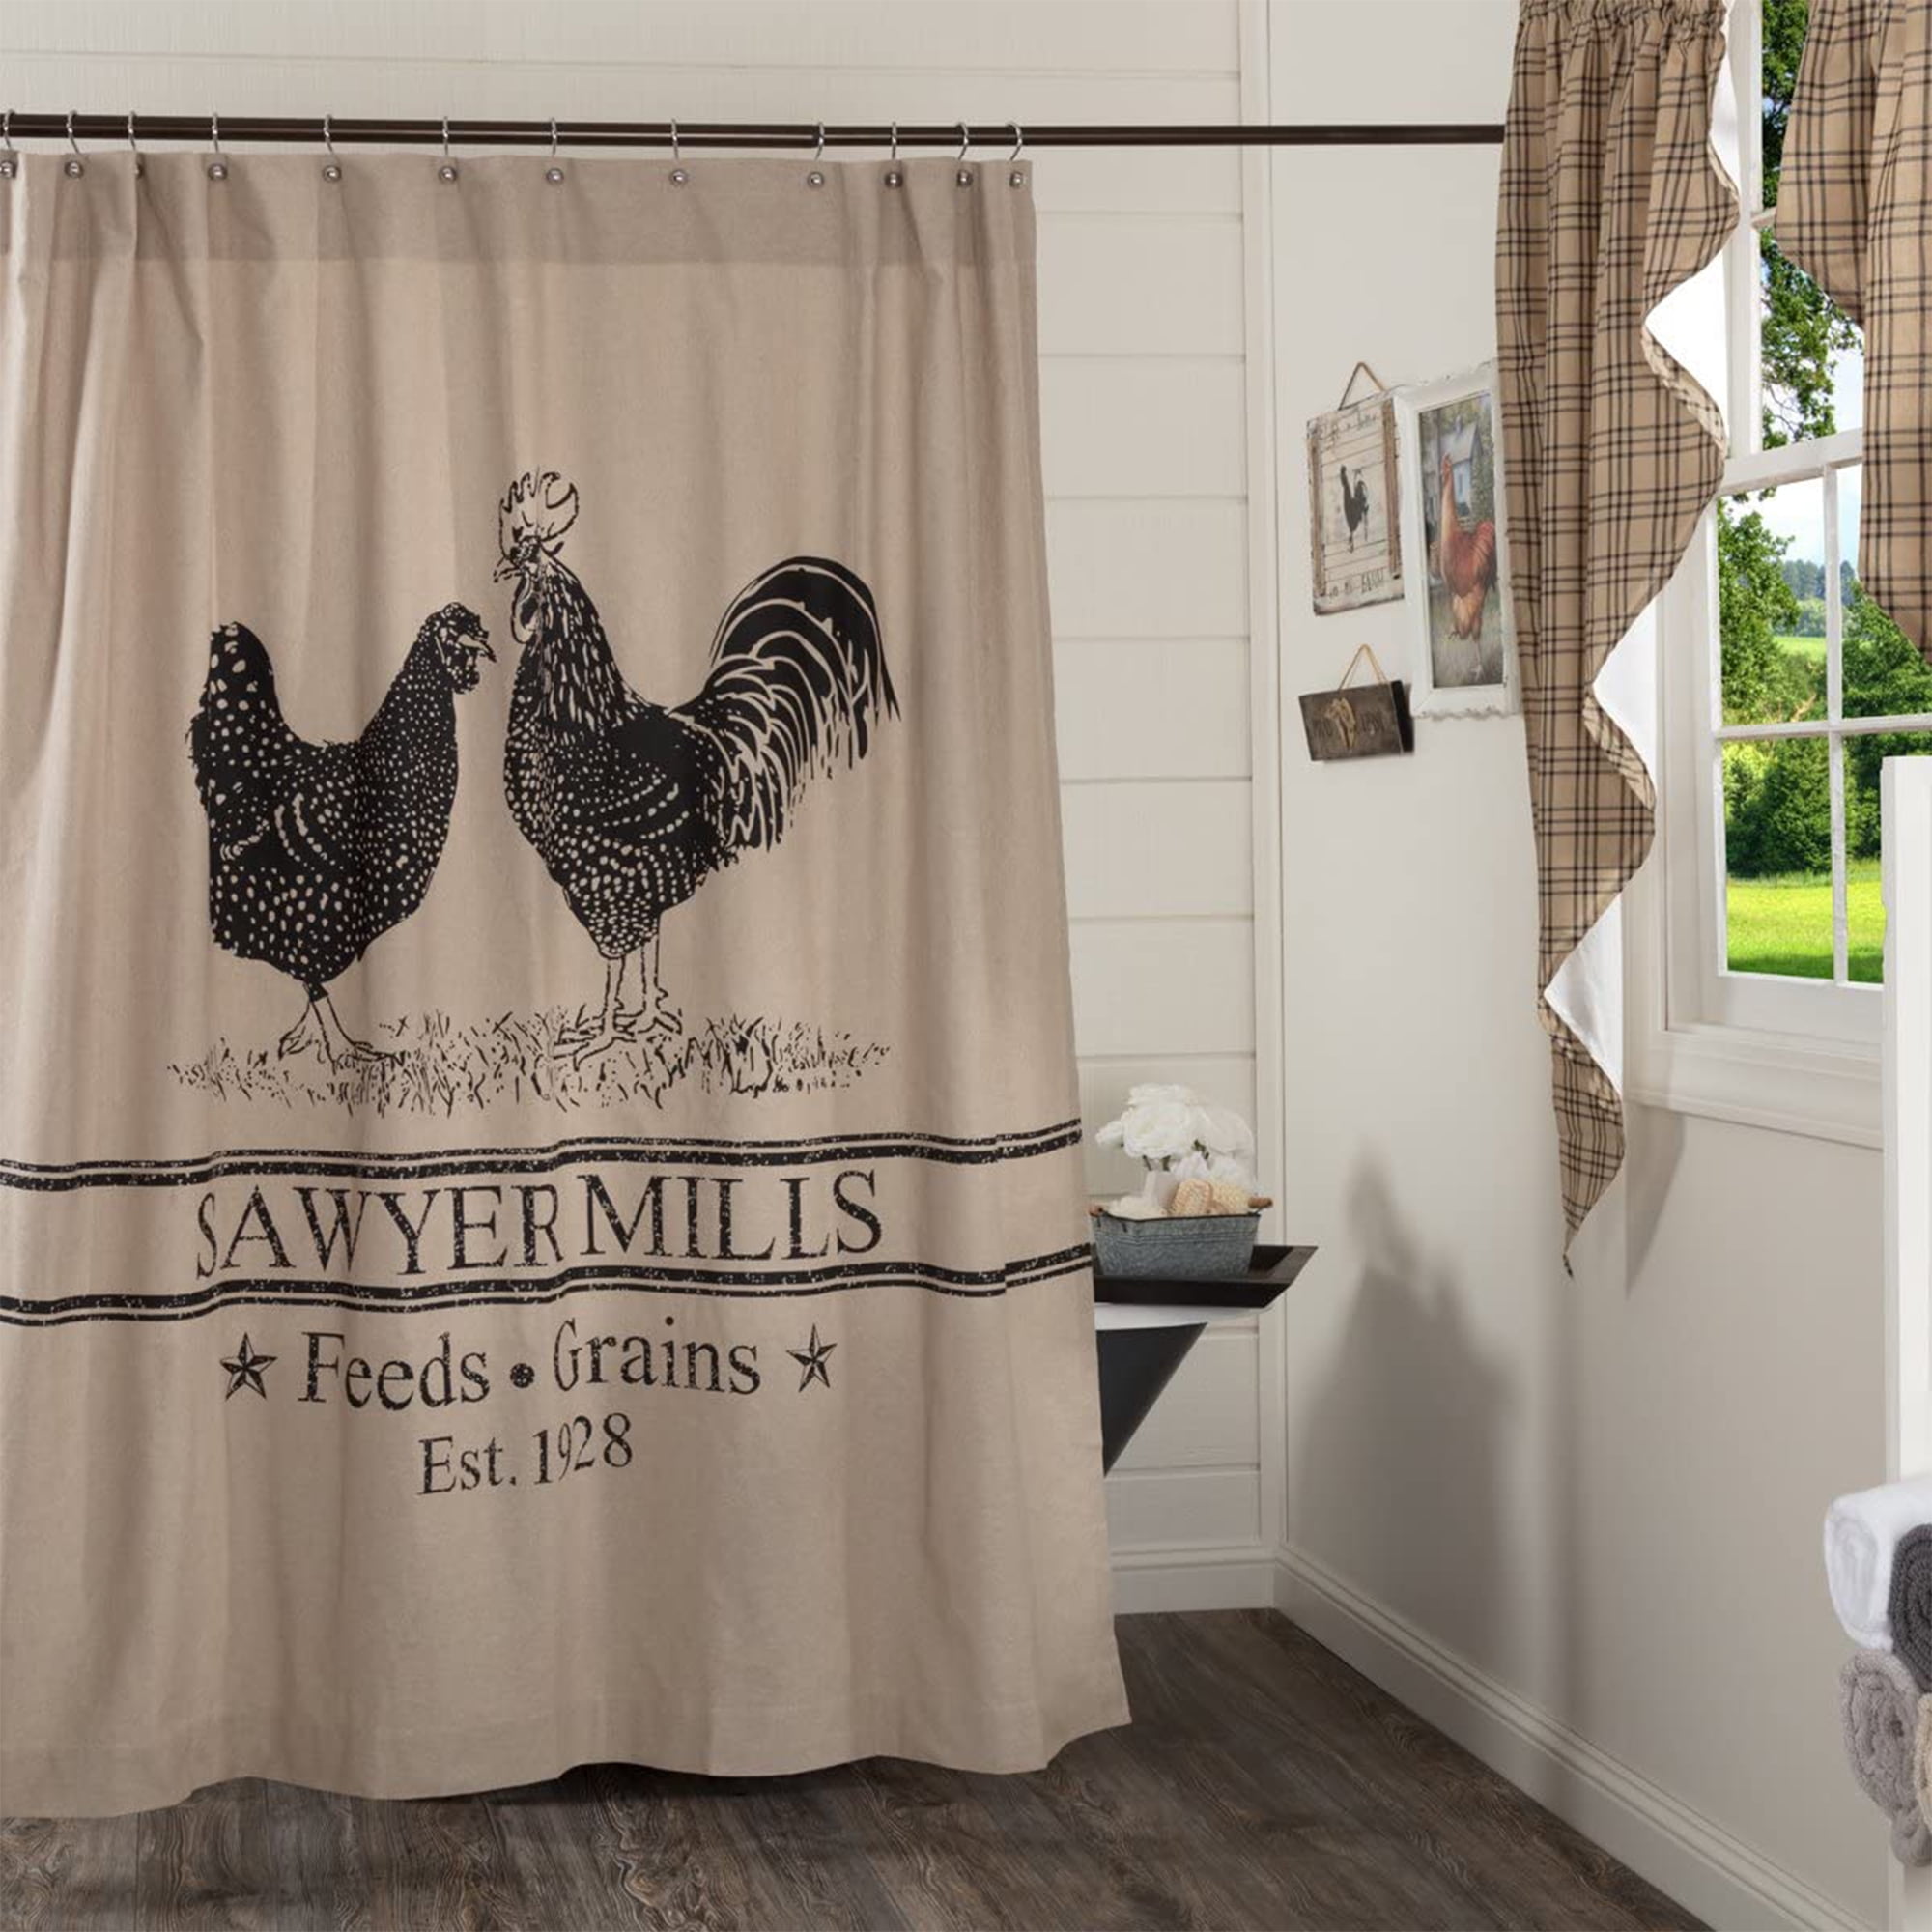 VHC Brands Farmhouse Shower Sawyer Mills Sheep & Curtain Black Rod Bath Decor 